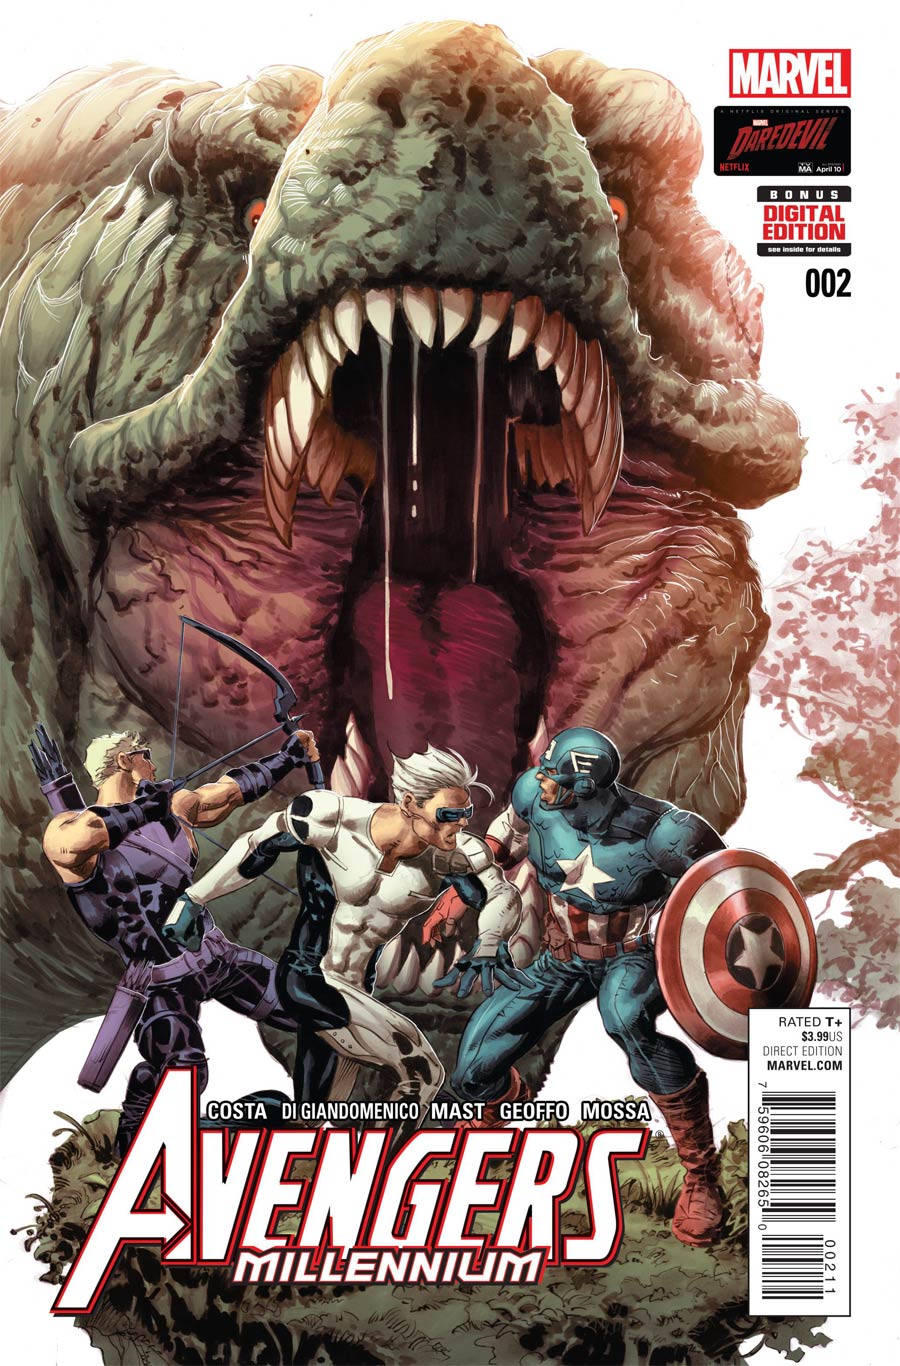 Avengers Millennium #2